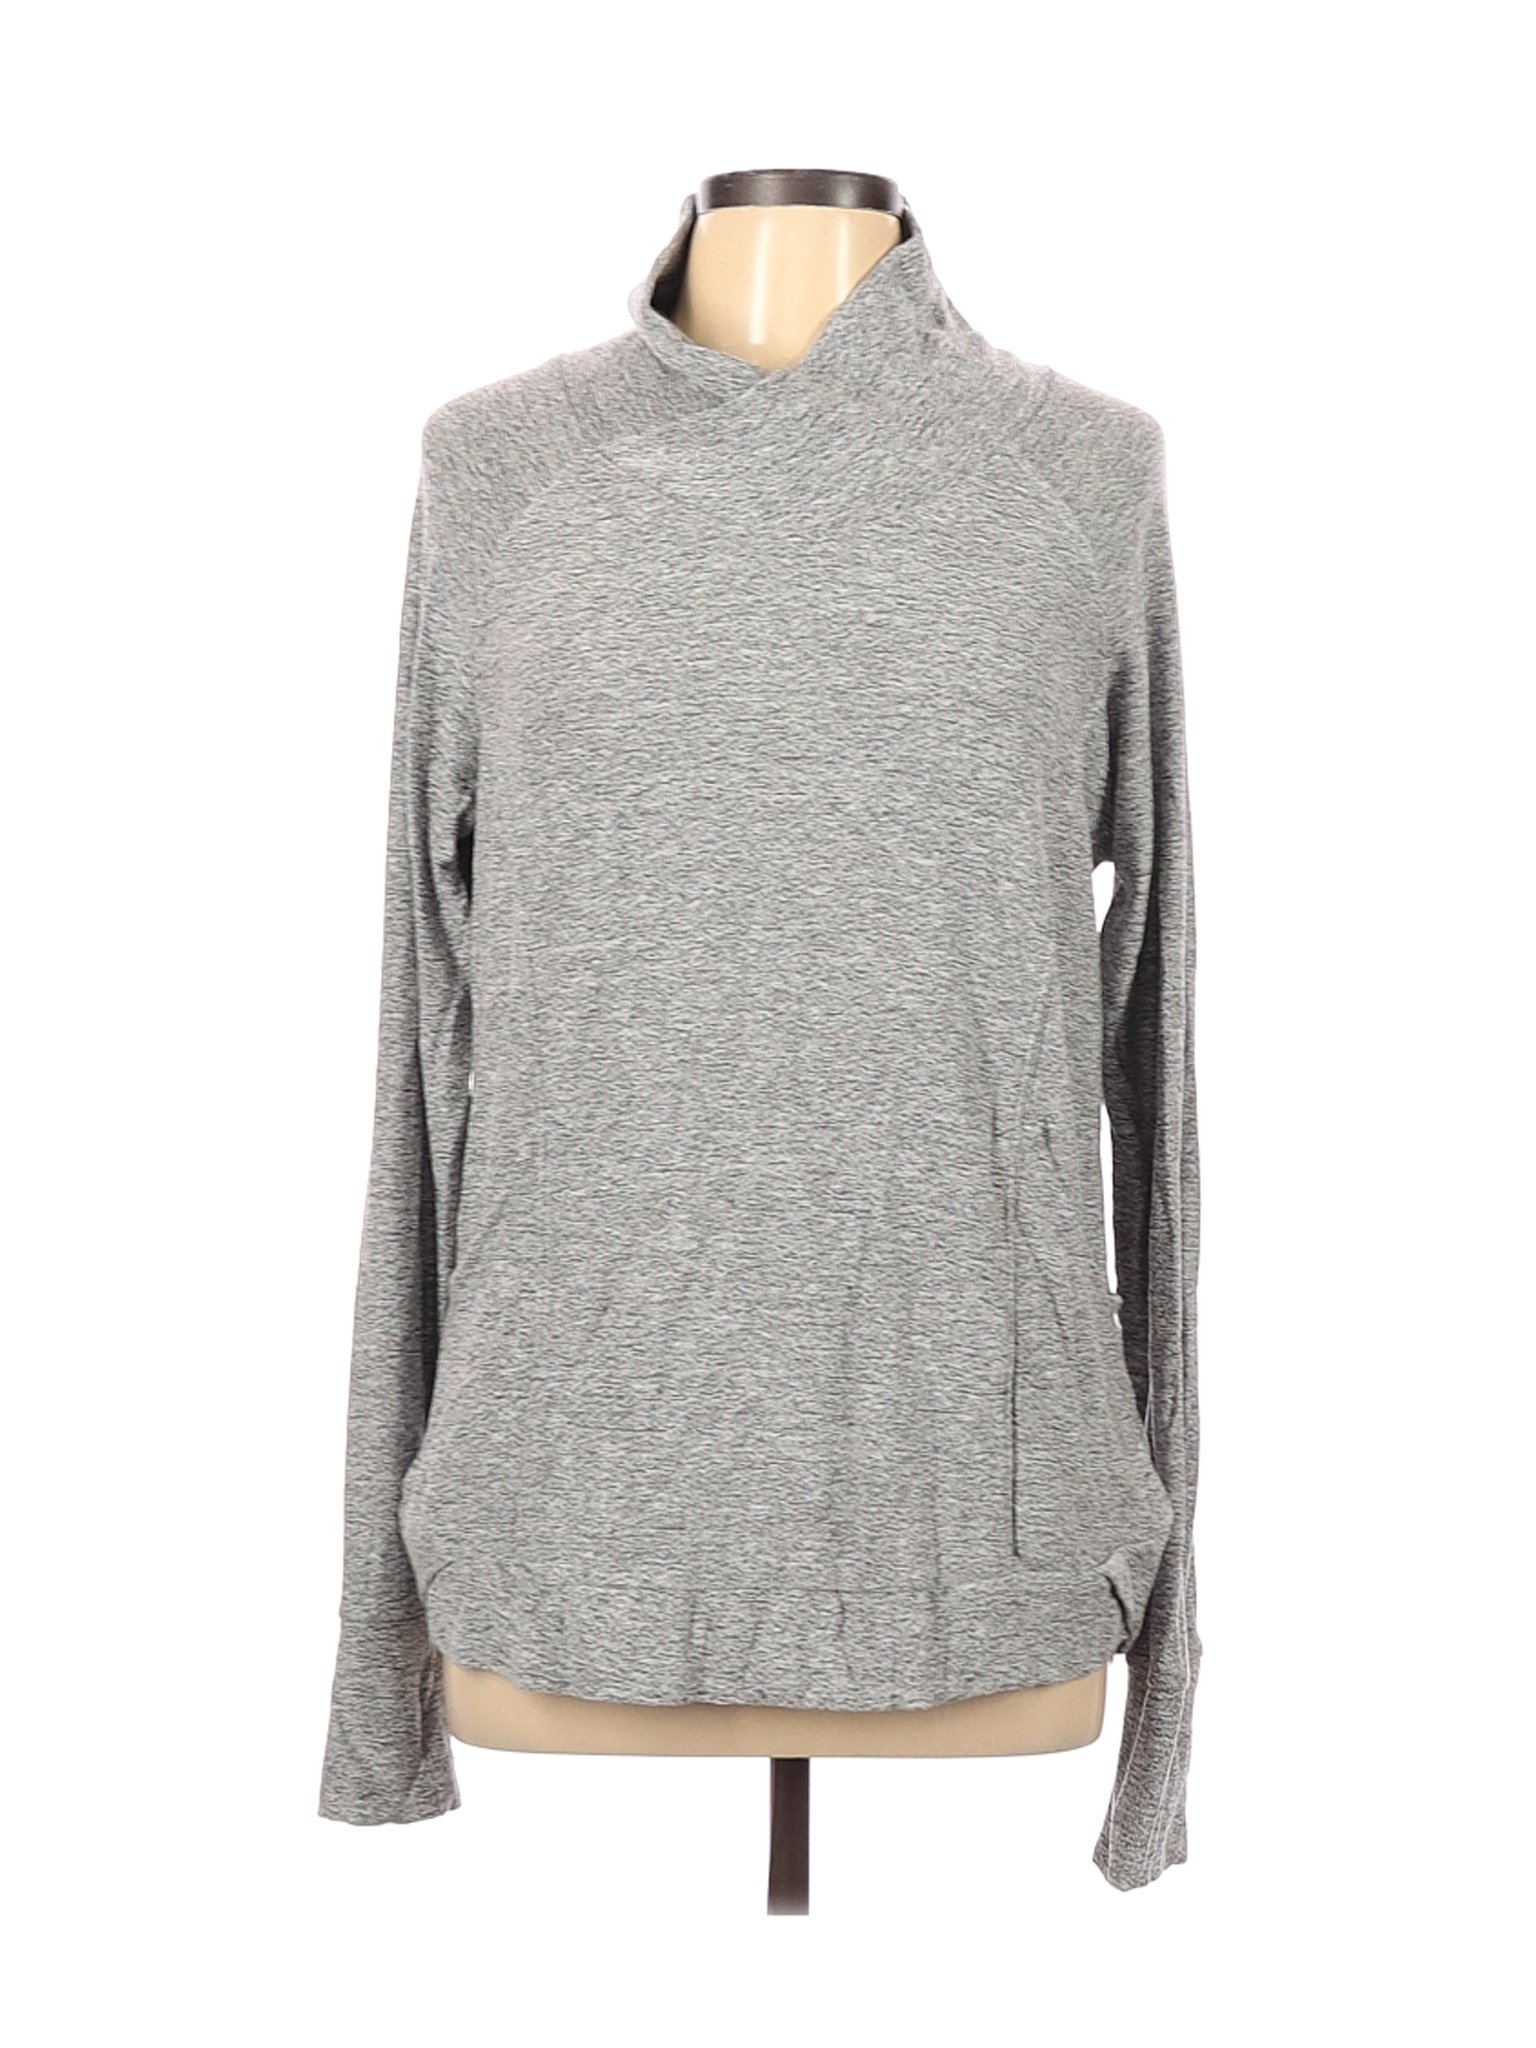 Jones New York Women Gray Pullover Sweater L | eBay